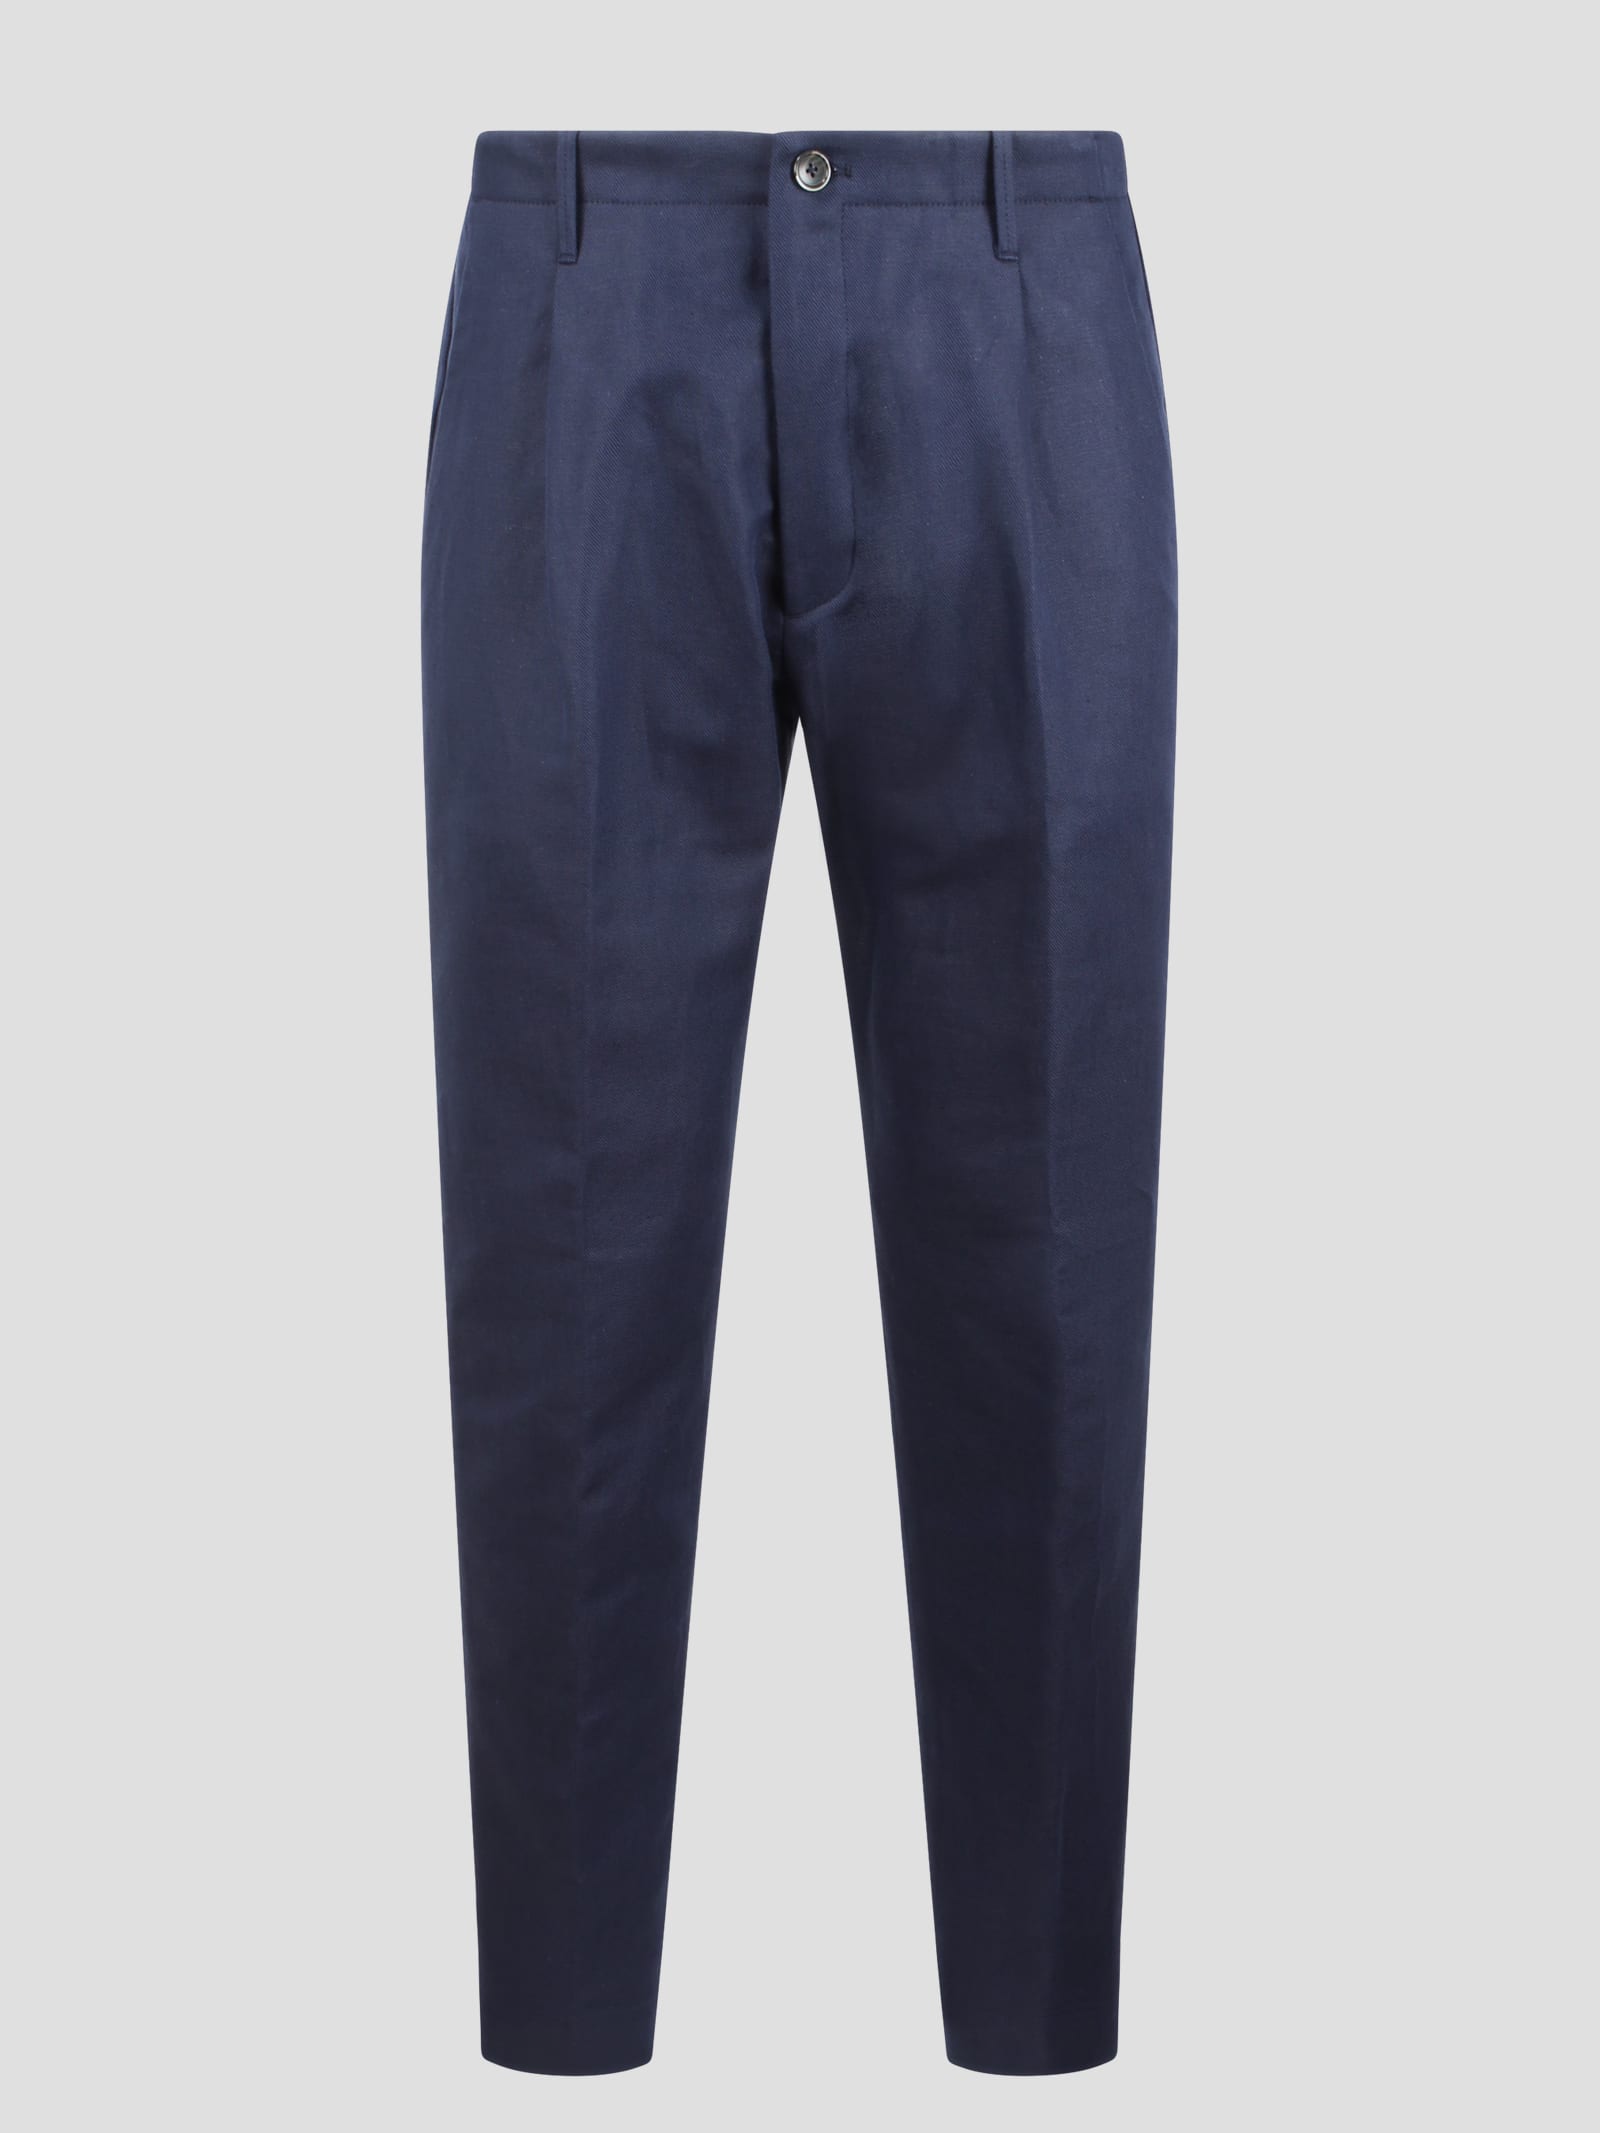 Fold Chino Pence Trousers